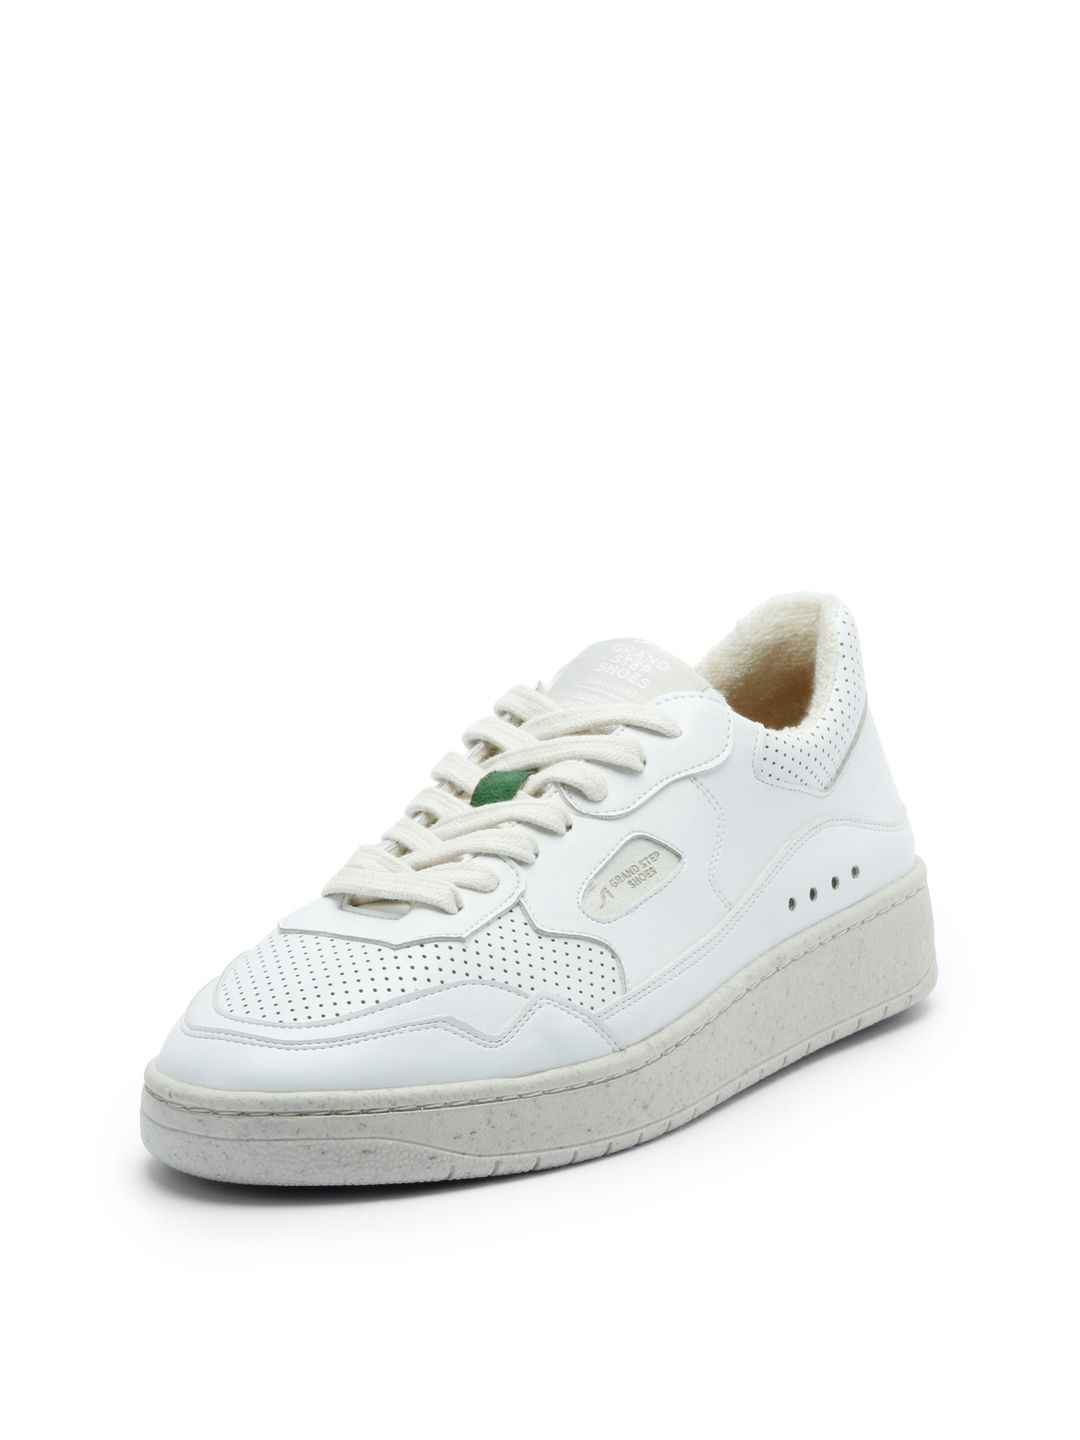 Sneaker Level white von Grand Step Shoes